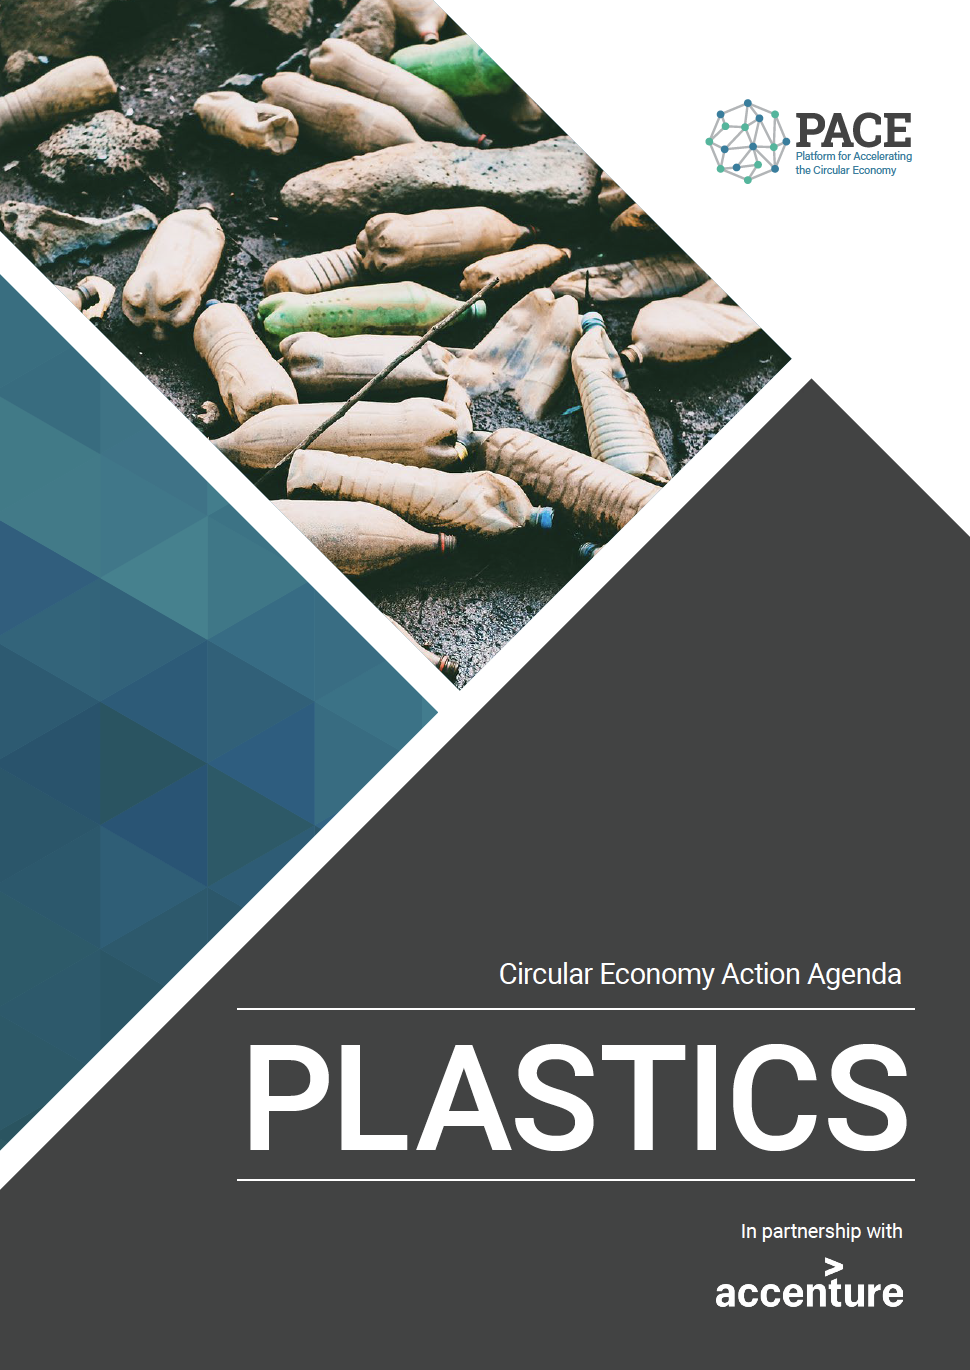 The Circular Economy Action Agenda for Plastics